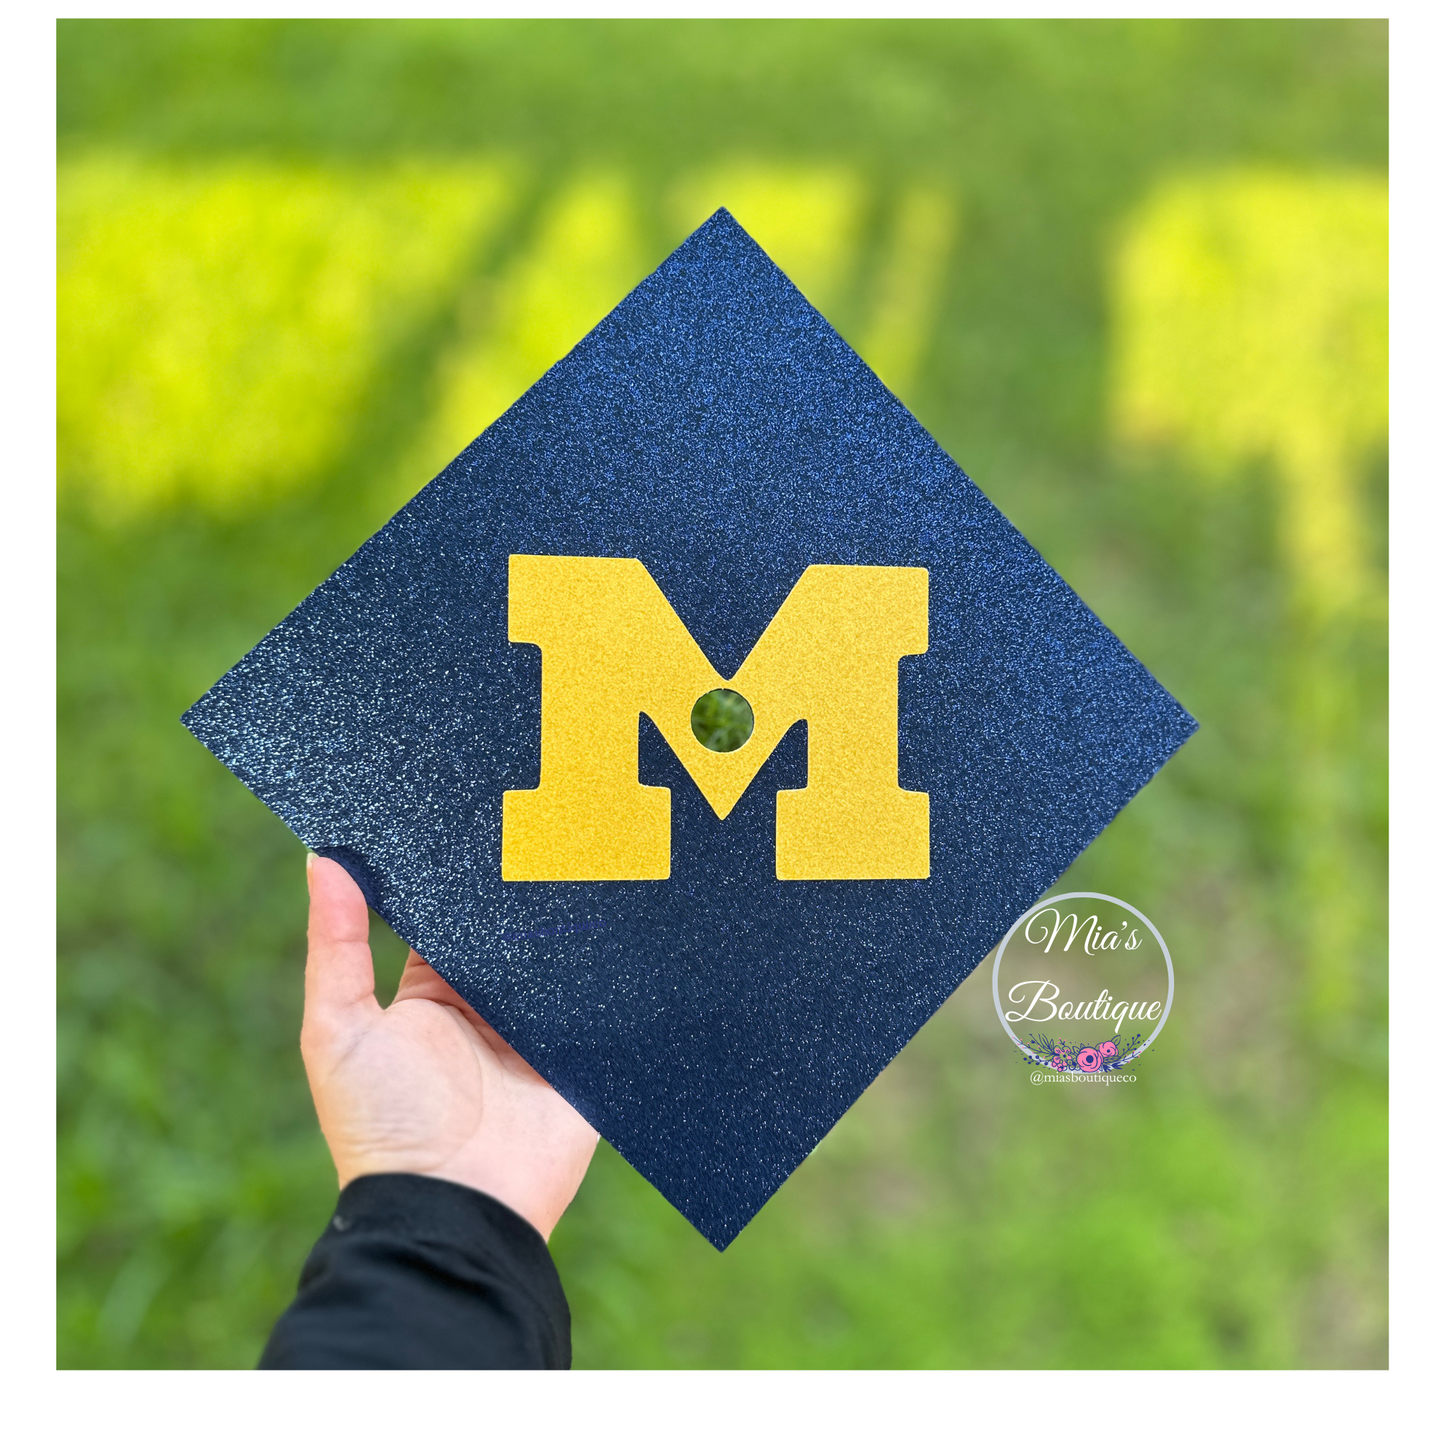 University Graduation Cap cover